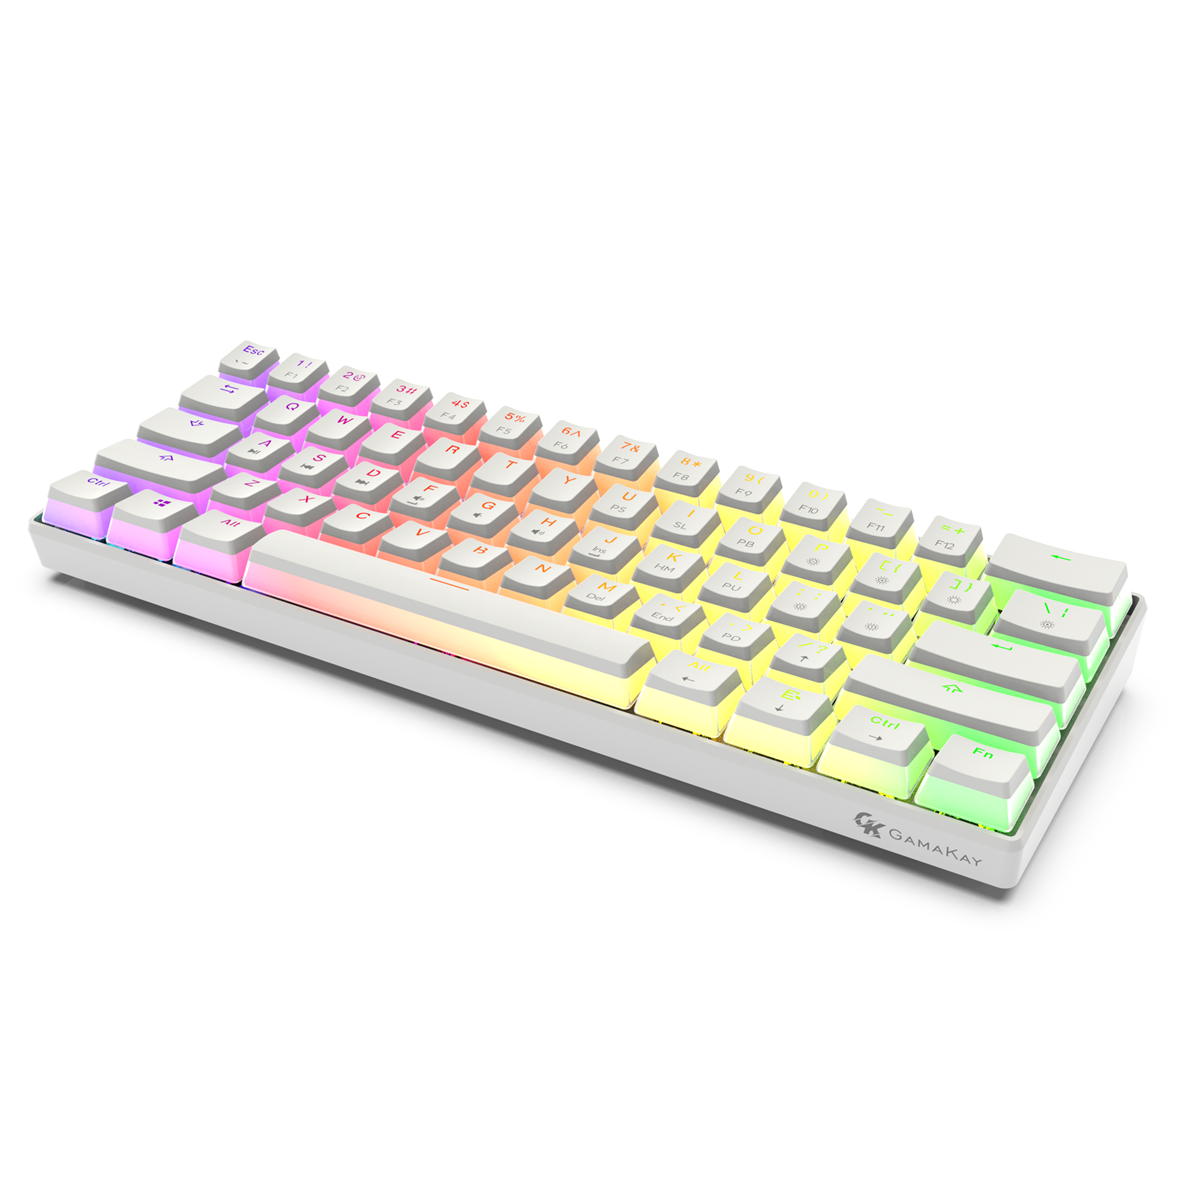 Image of GAMAKAY MK61 Wired Mechanical Keyboard Gateron Optical Switch Pudding Keycaps RGB 61 Keys Hot Swappable Gaming Keyboard